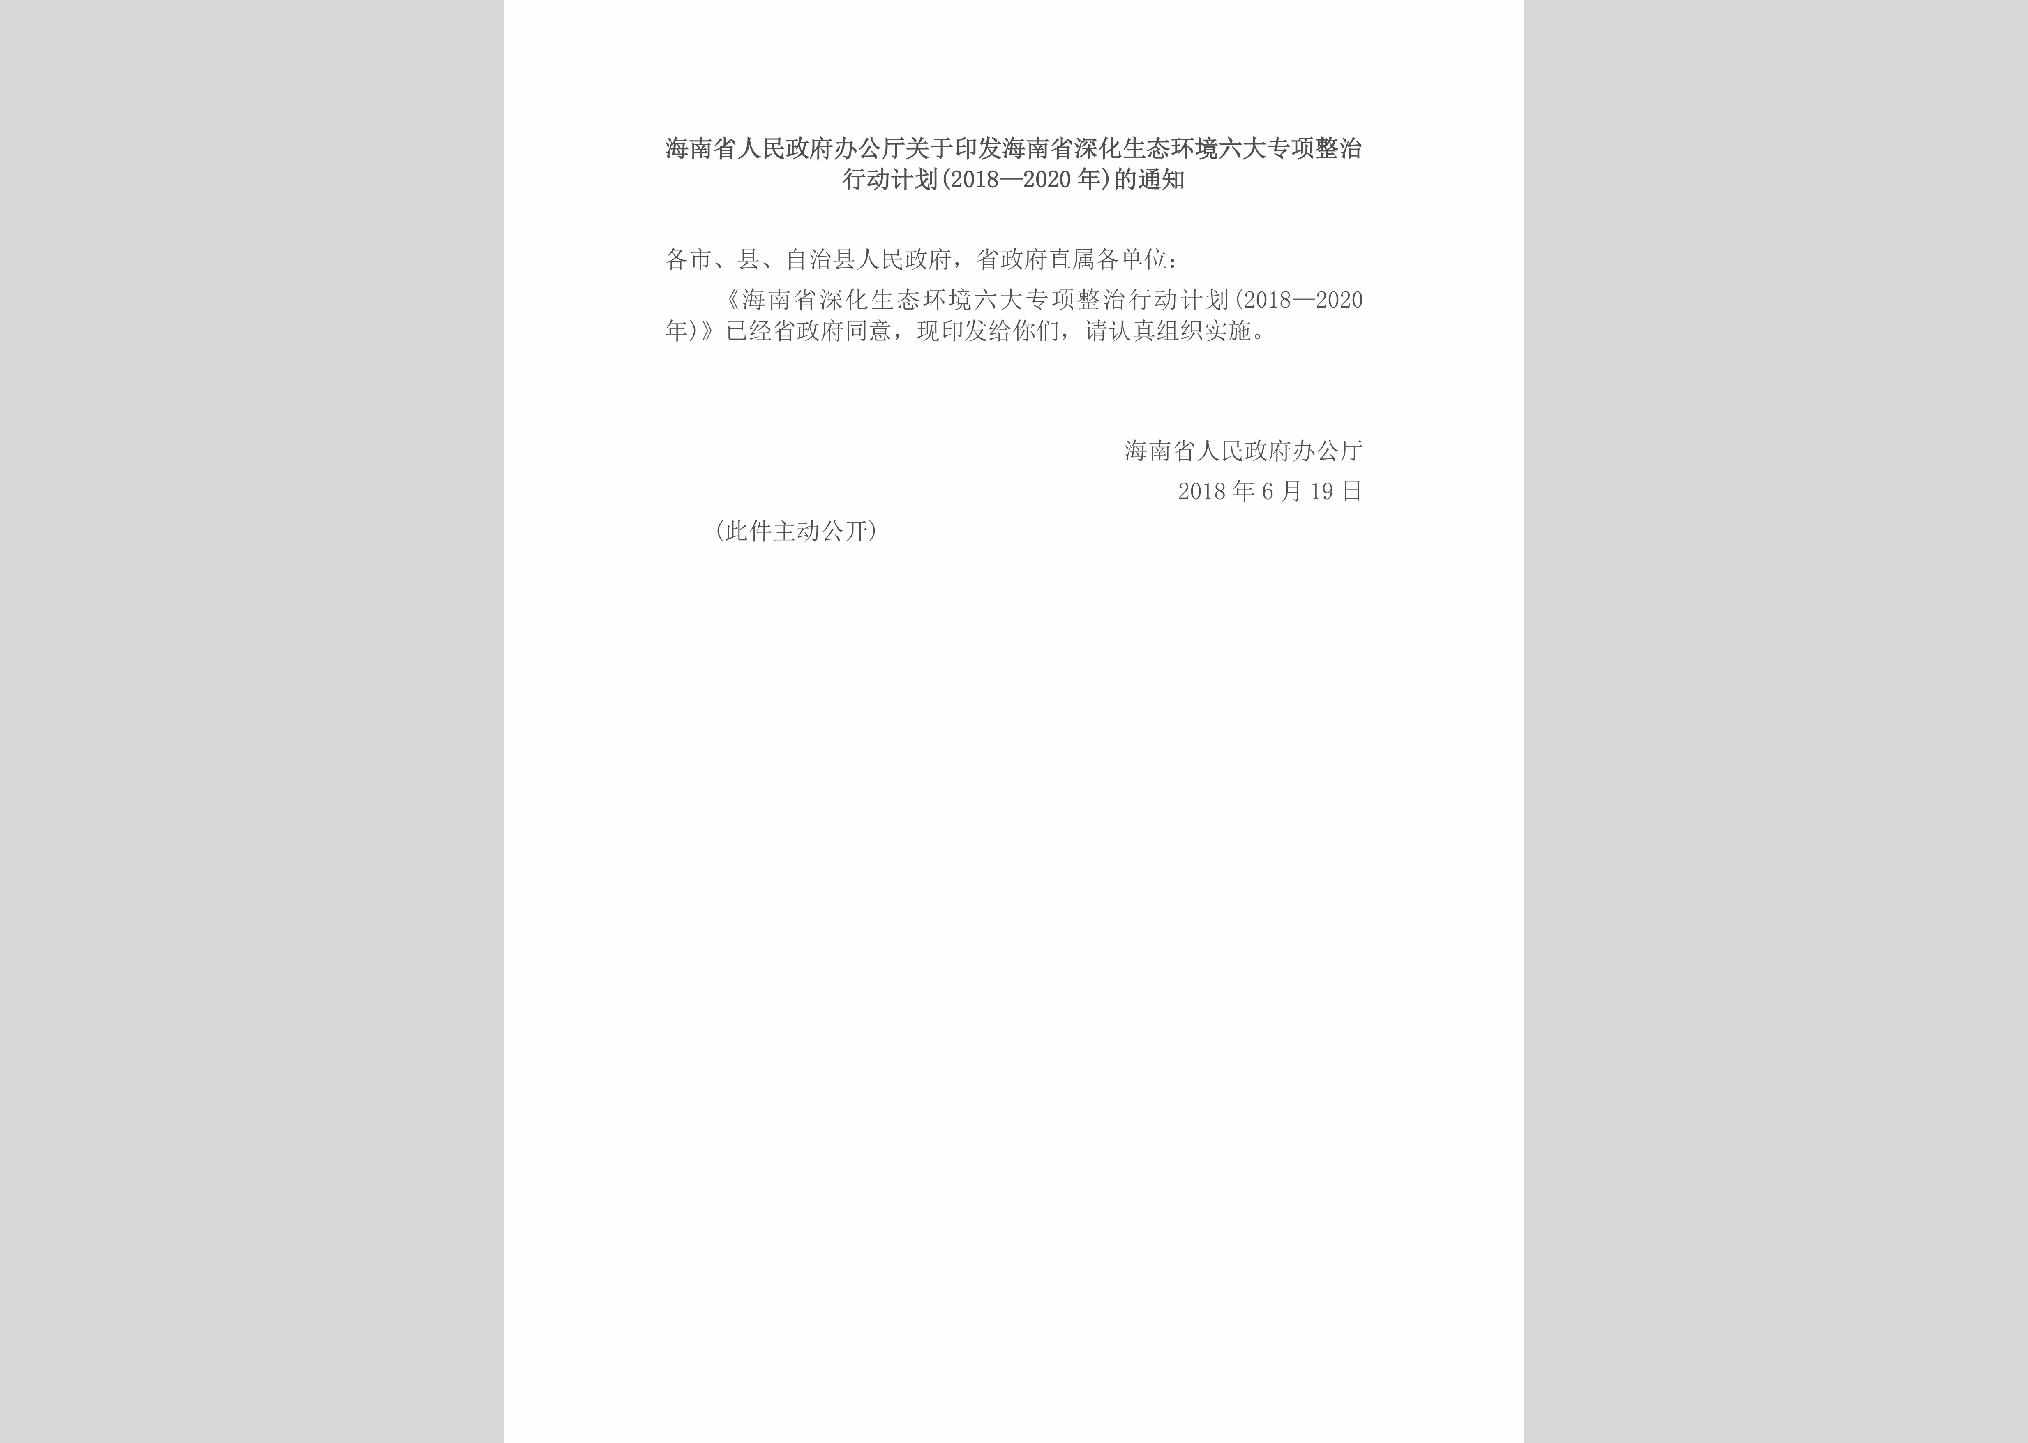 HAN-SHSTHJZZ-2018：海南省人民政府办公厅关于印发海南省深化生态环境六大专项整治行动计划(2018—2020年)的通知